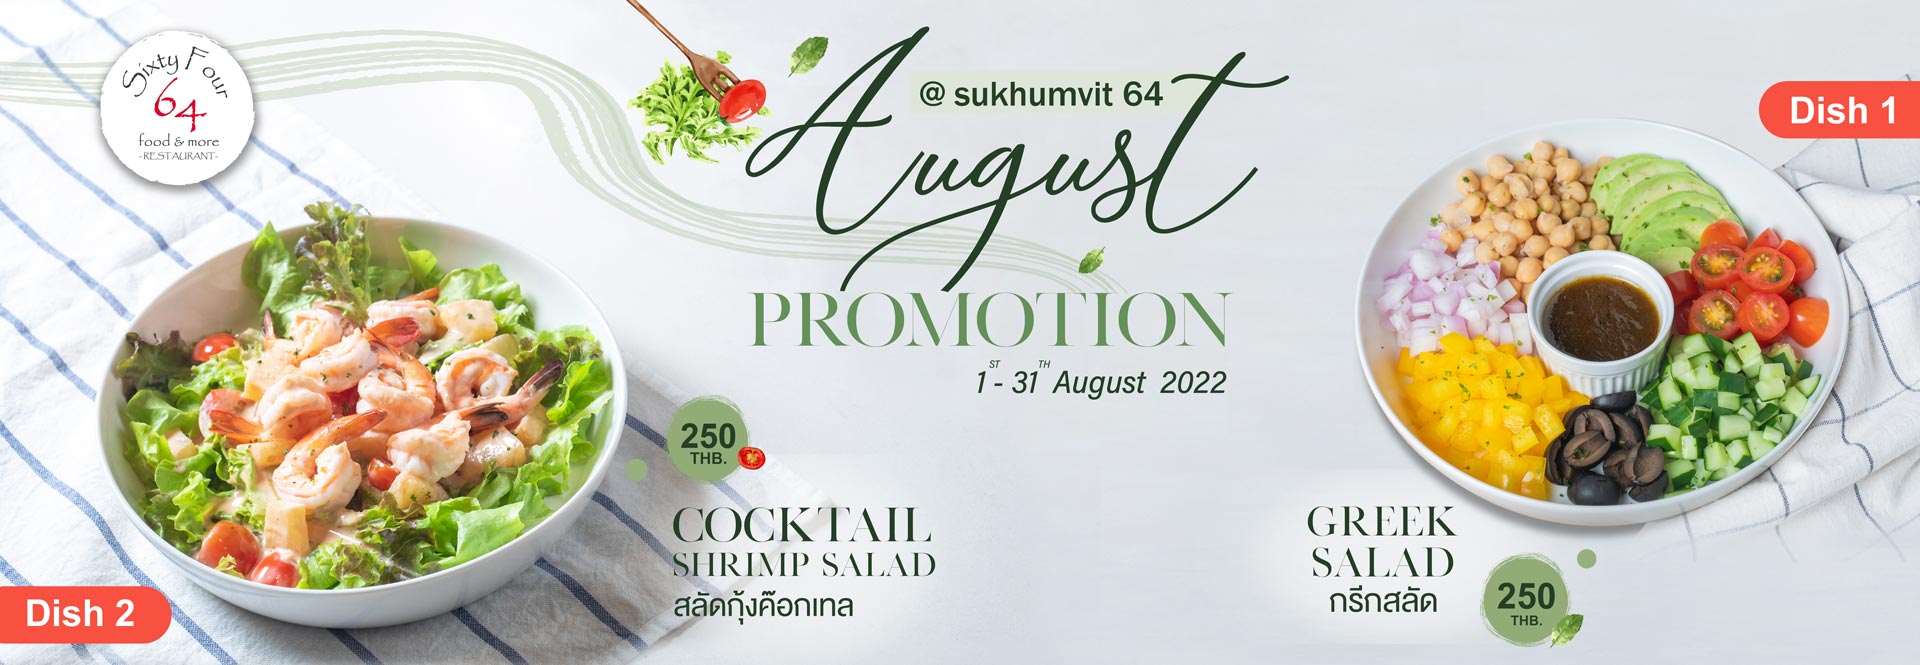 Promotion Aug 2022